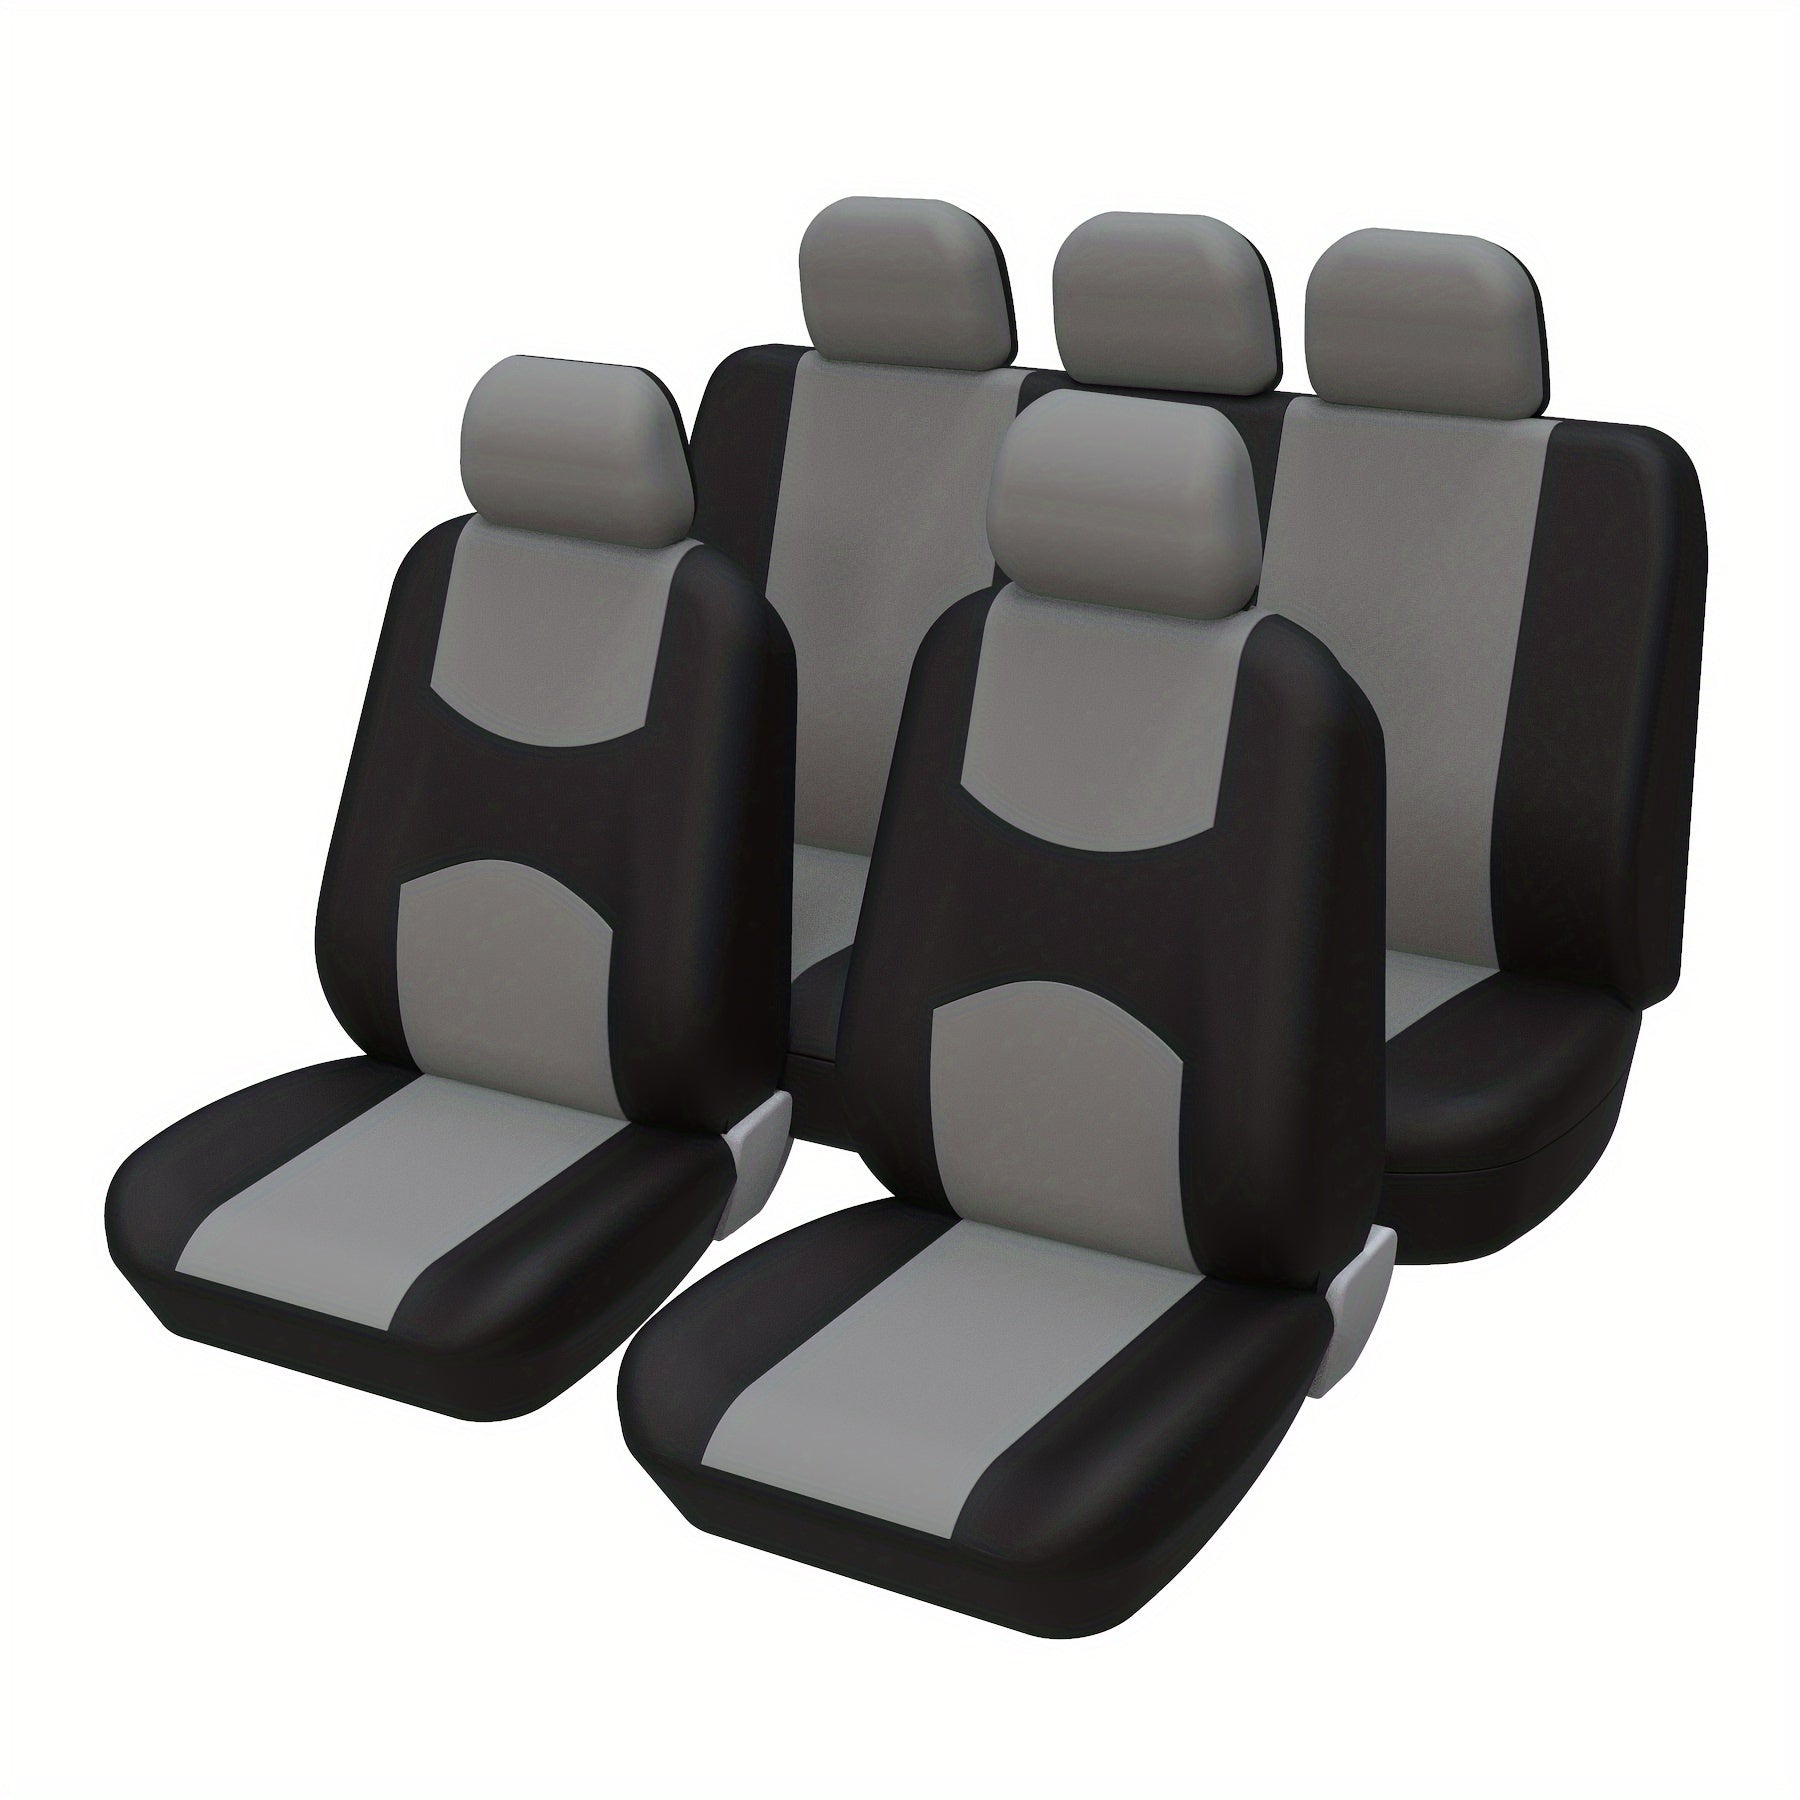 Four Seasons General Motors Seat Covers Universal Seat Covers Fabric Seat Covers Interior Car Seat Covers